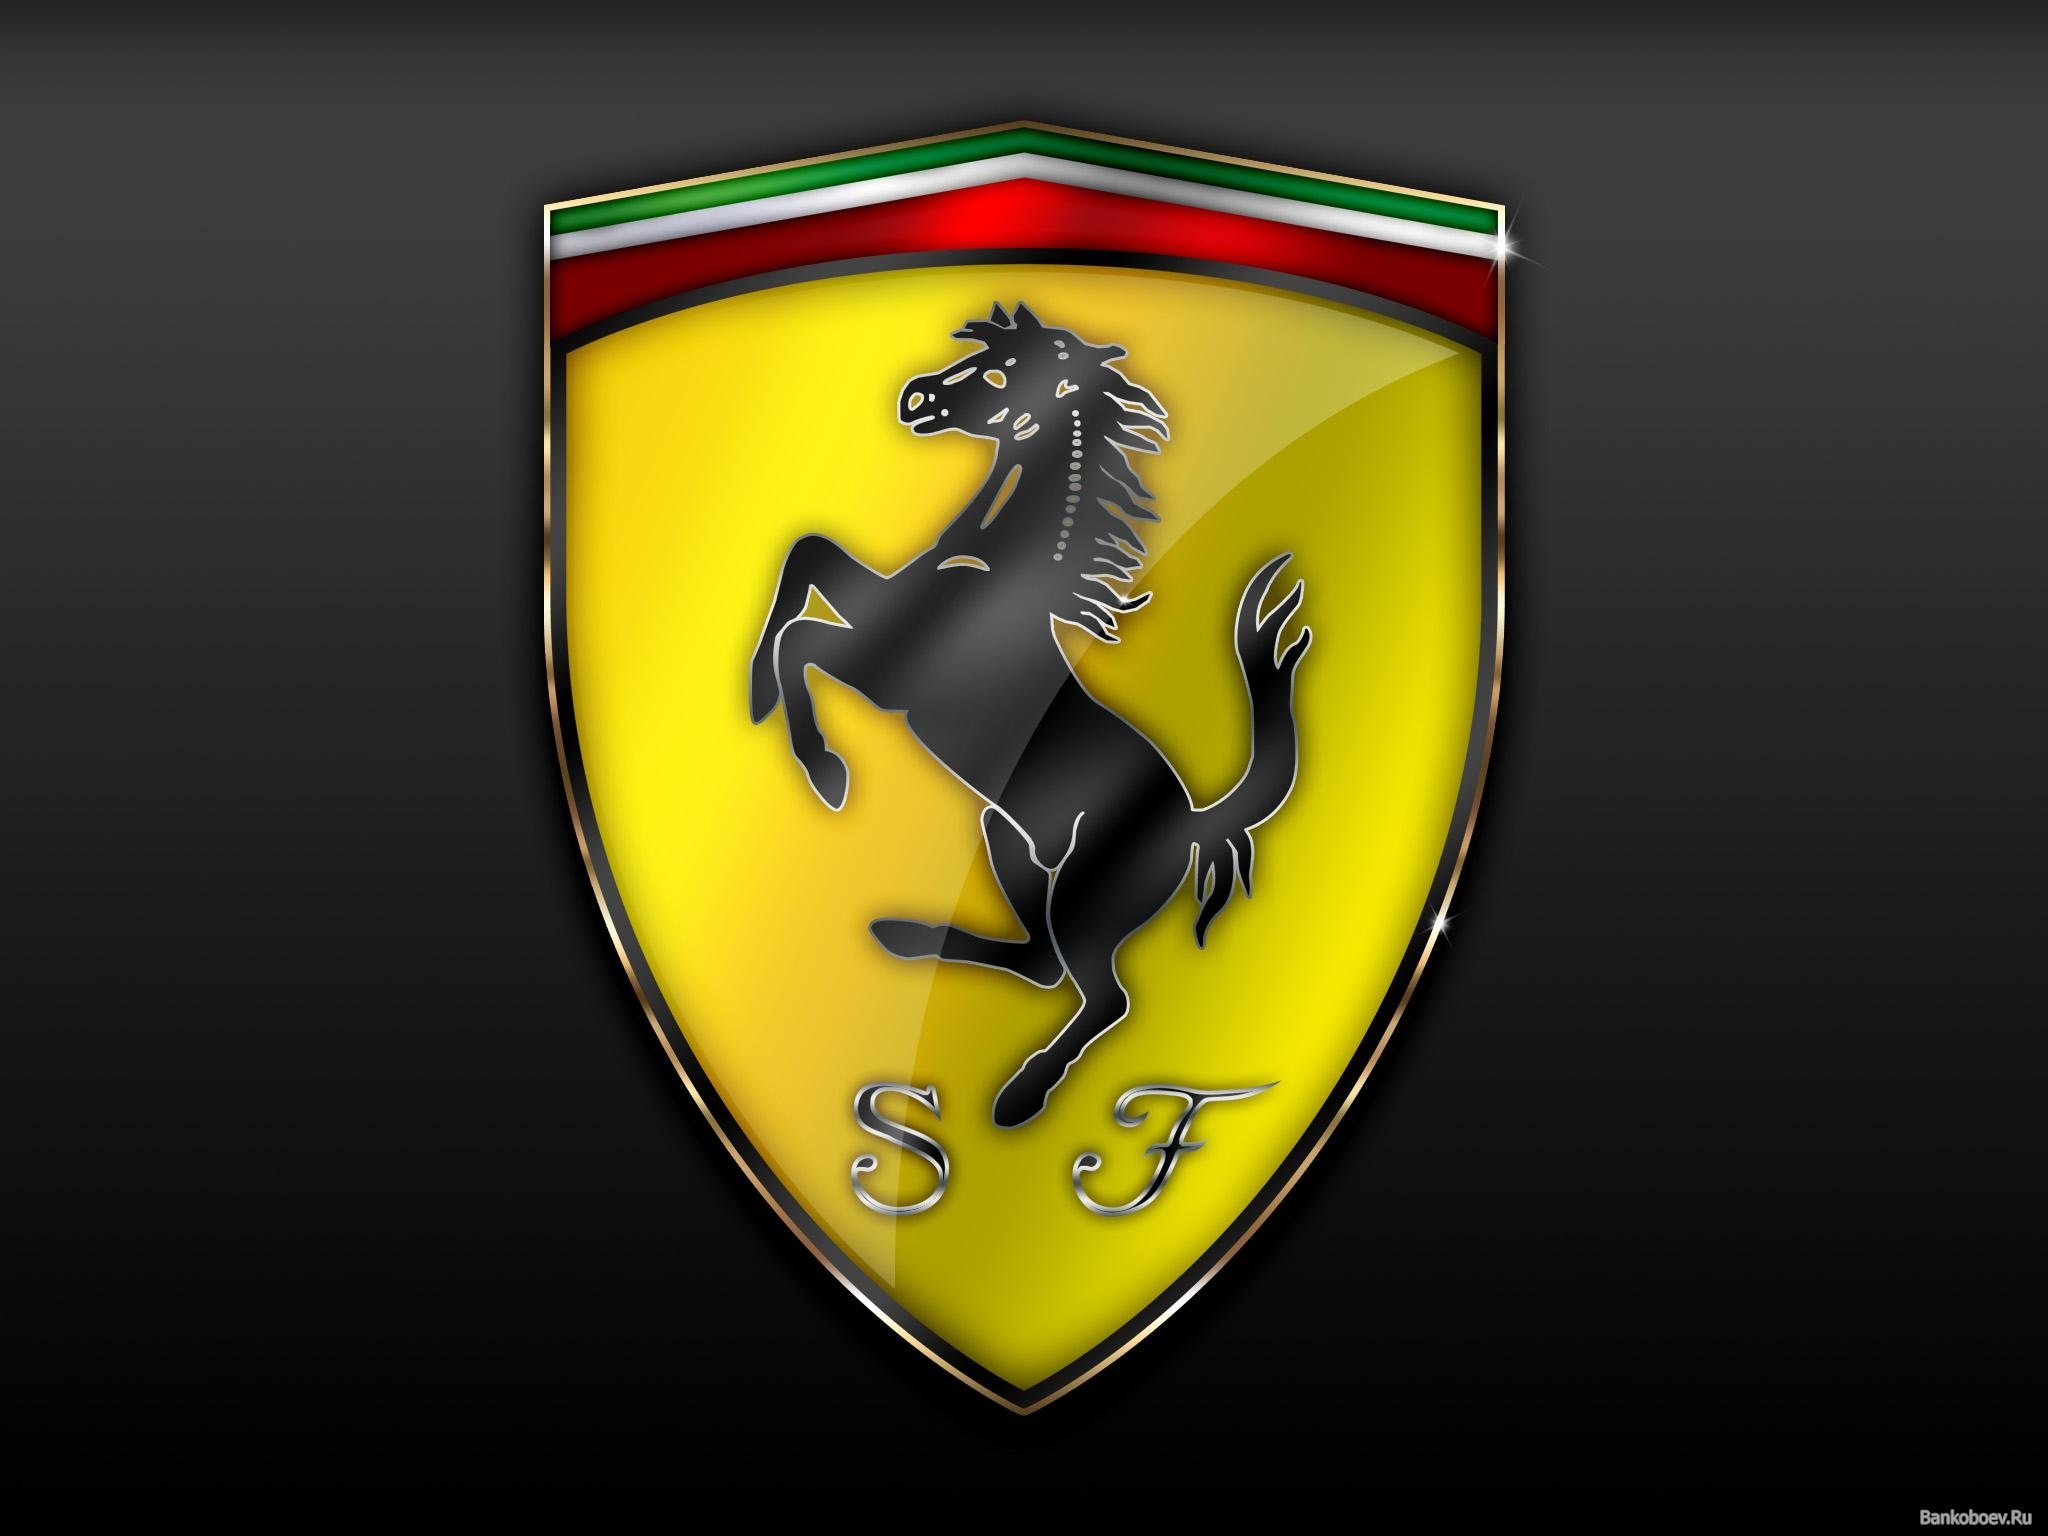 Ferrari Logo Cars Wallpapers Hd Desktop And Mobile Backgrounds